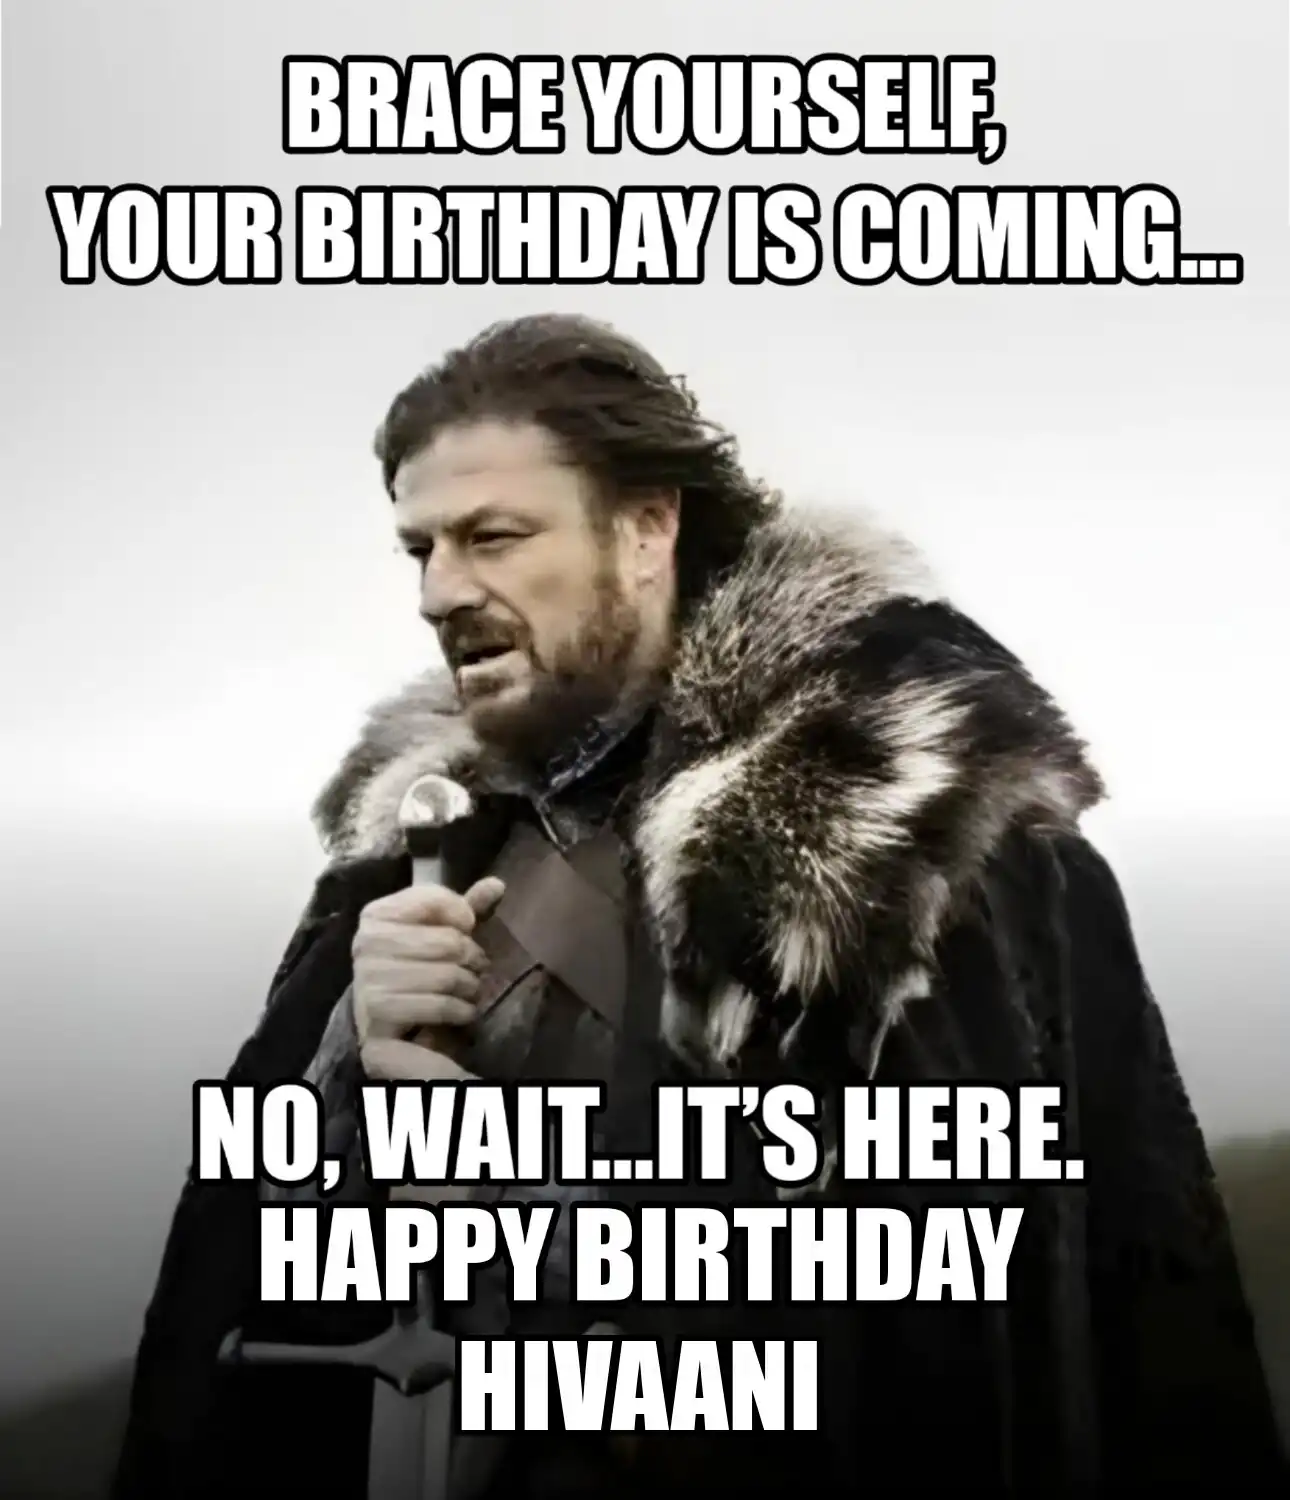 Happy Birthday Hivaani Brace Yourself Your Birthday Is Coming Meme